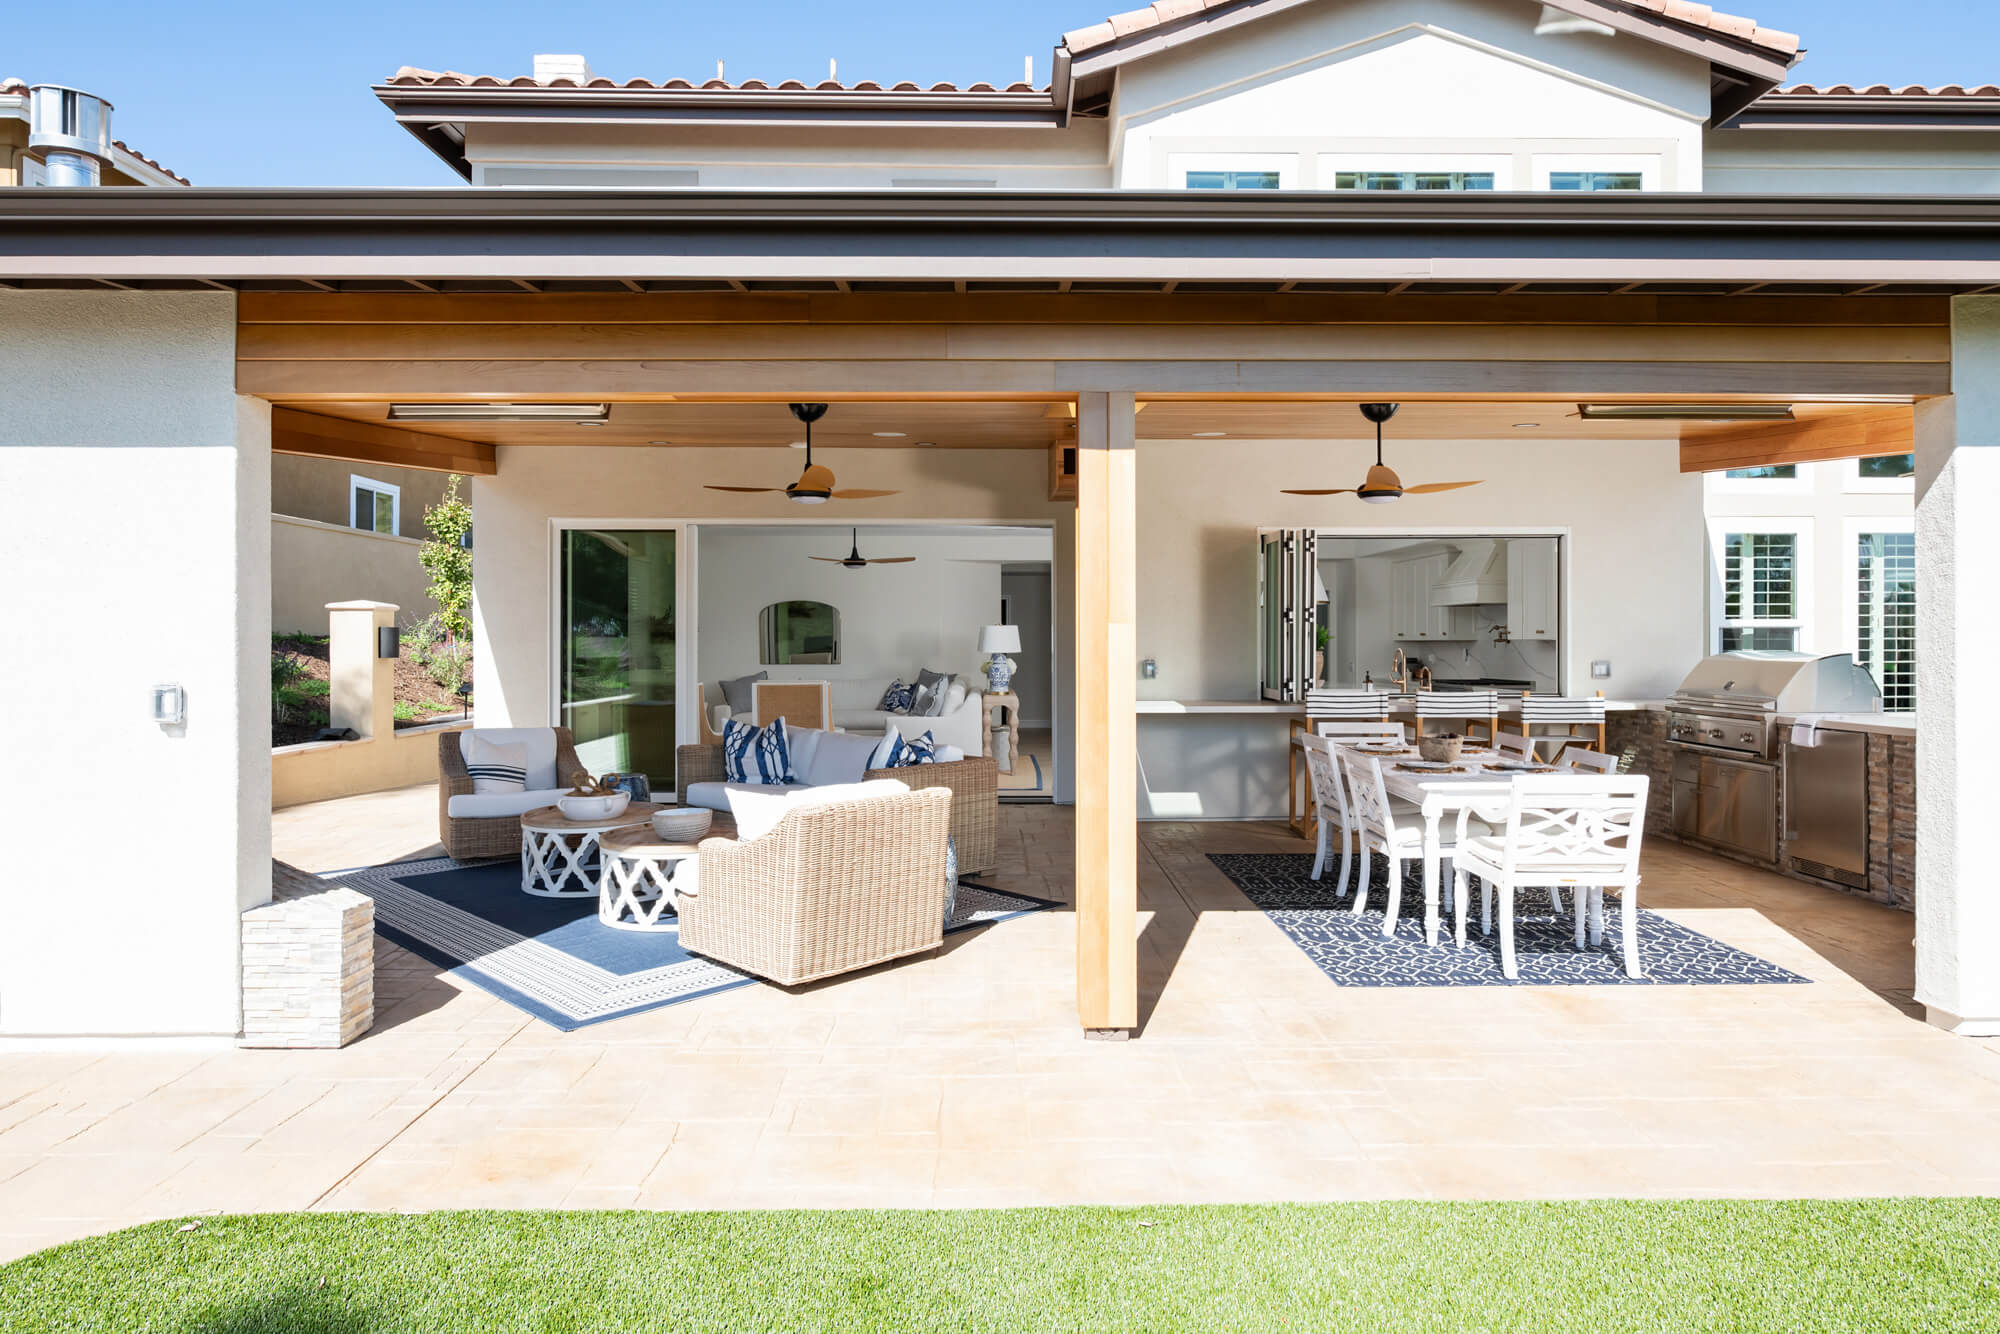 stamped-concrete-patio-flooring-stones-of-athens-limestone-marble-granite - Outdoor Kitchen Design